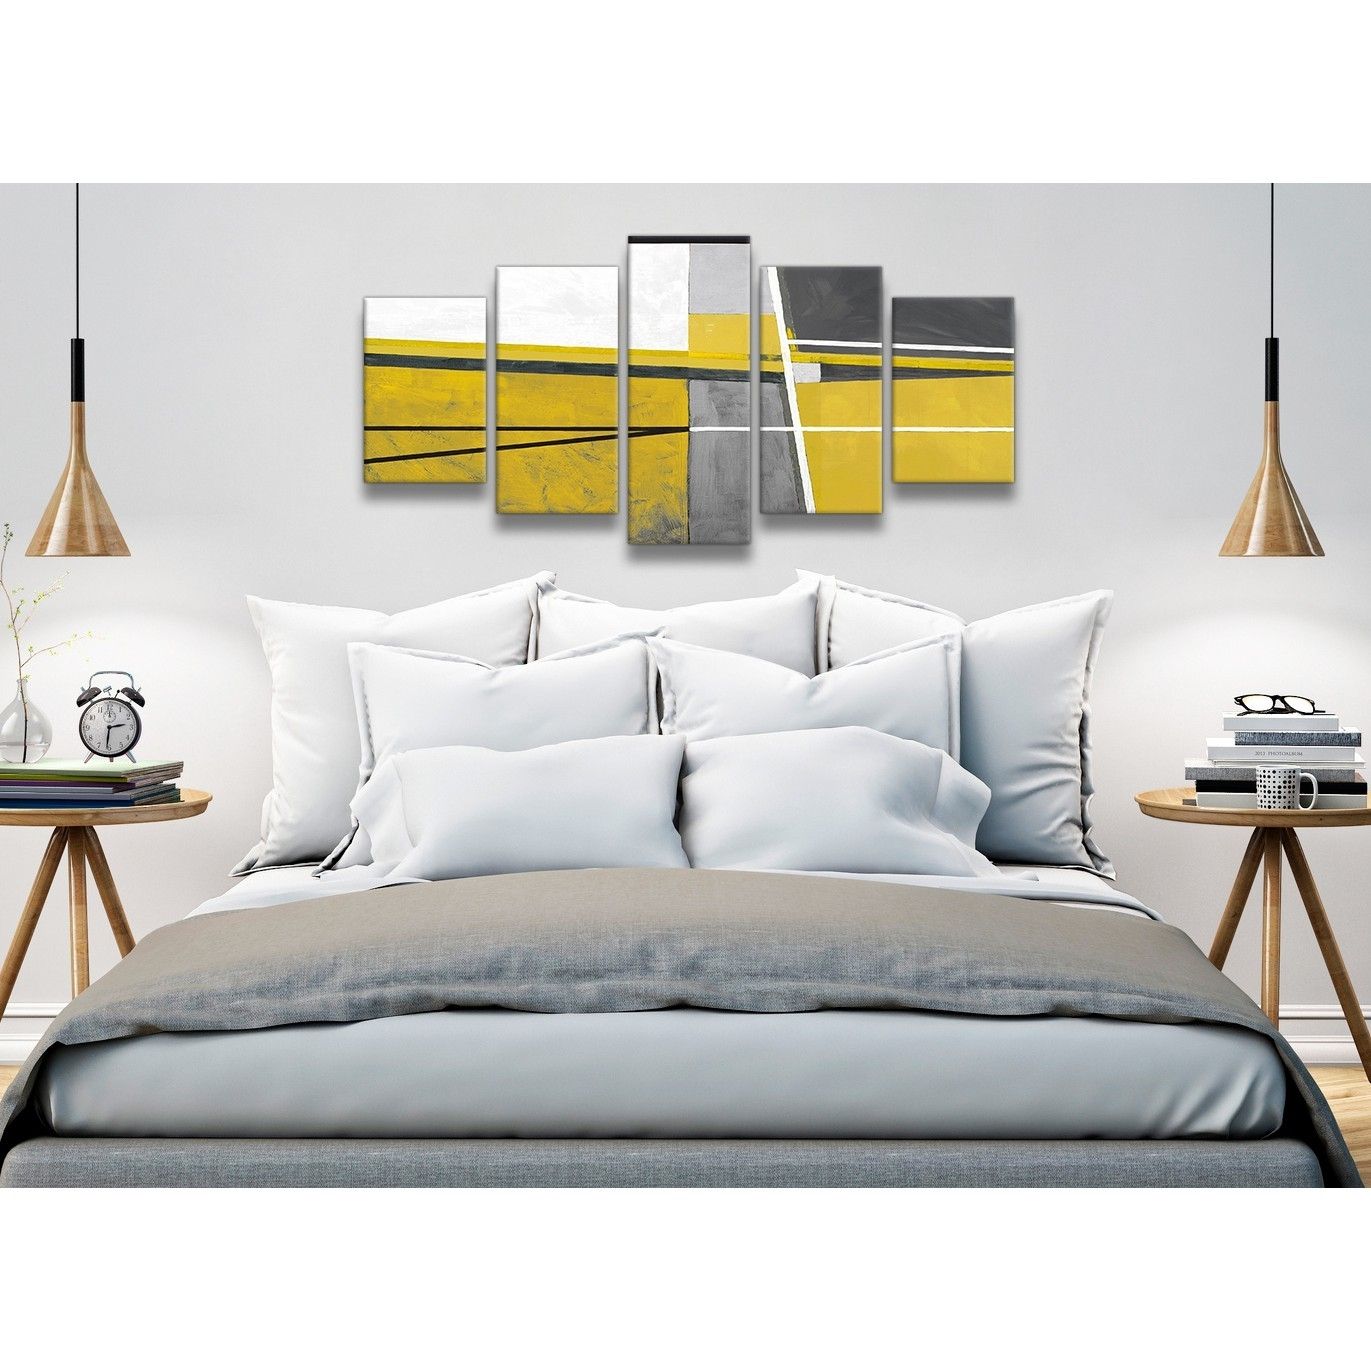 5 Panel Mustard Yellow Grey Painting Abstract Bedroom Canvas Regarding Recent Wall Art For Bedroom (Gallery 11 of 15)